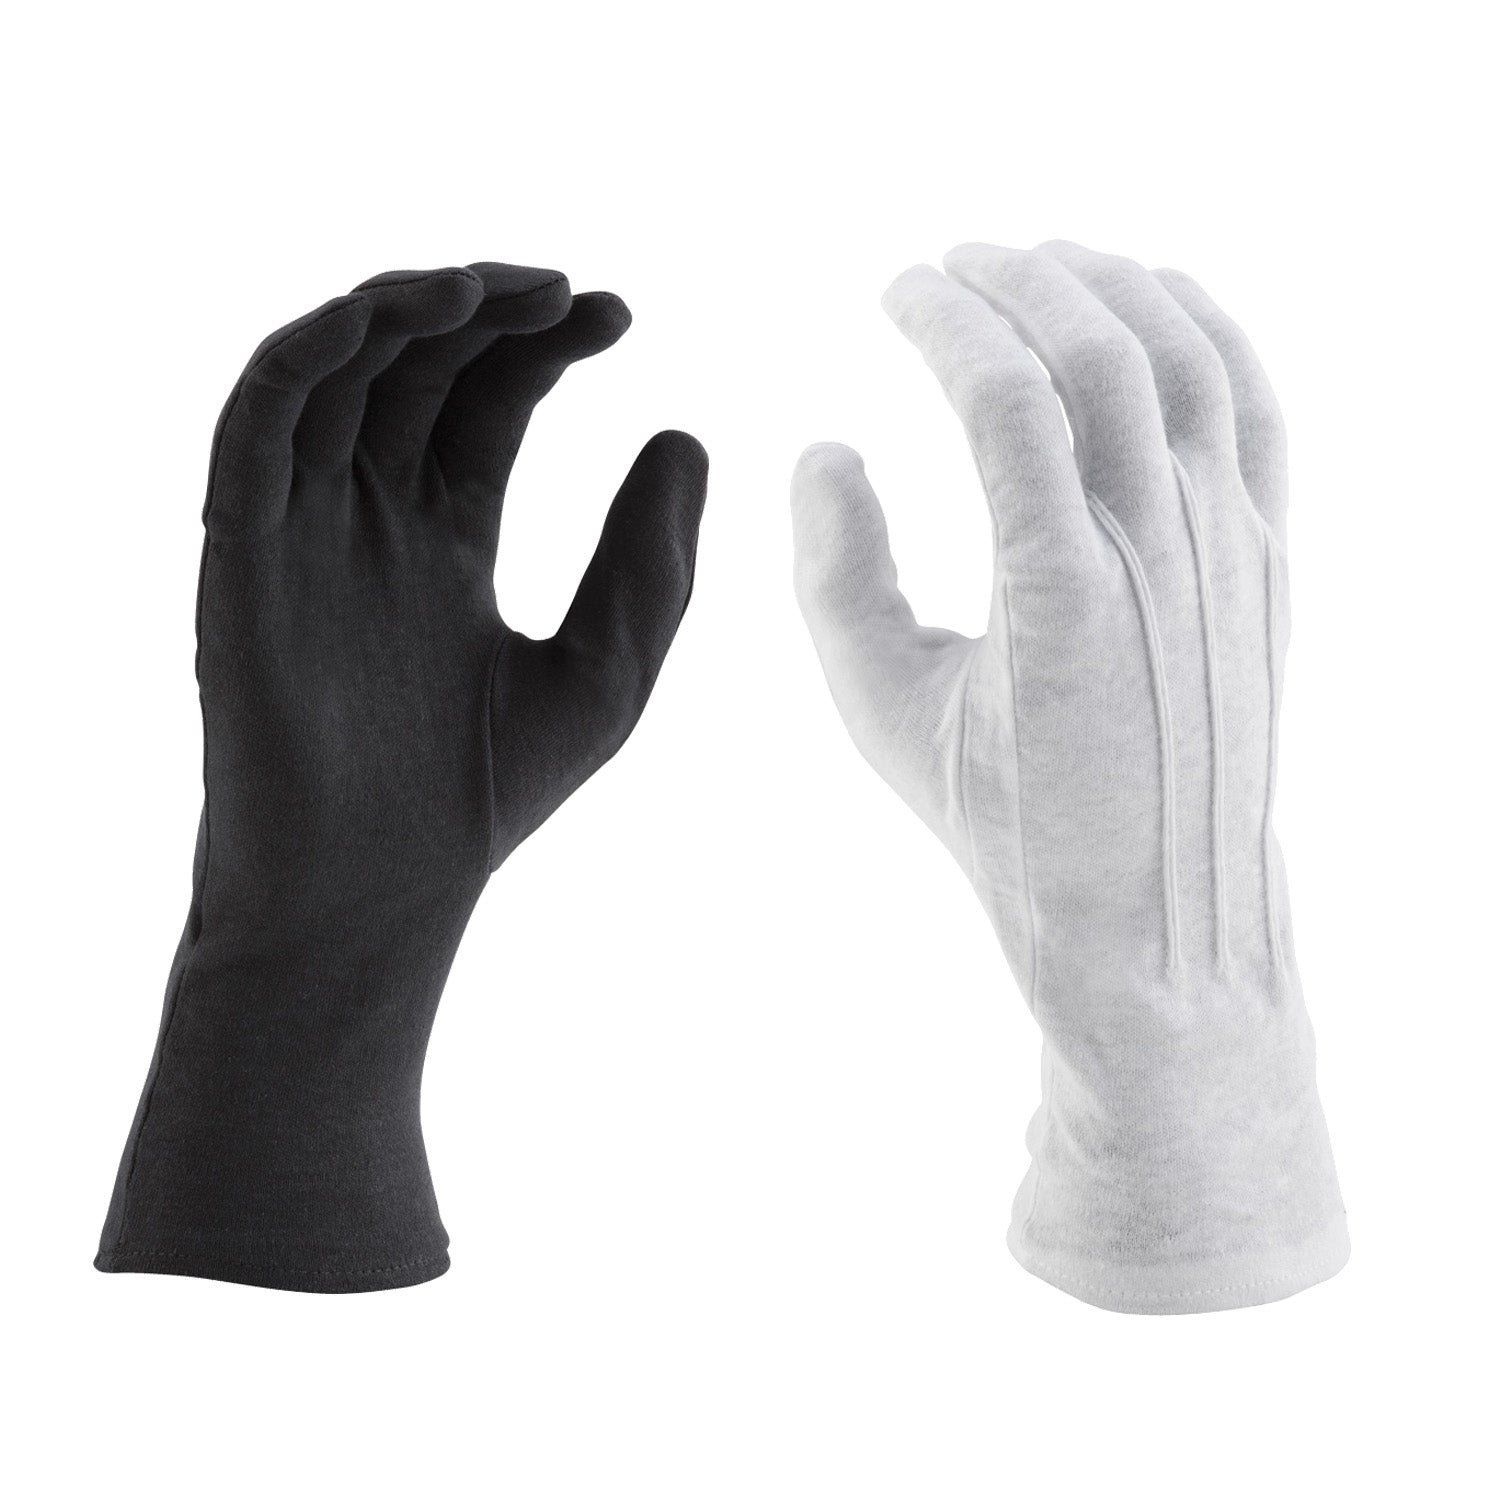 Deluxe Beaded Grip Gloves